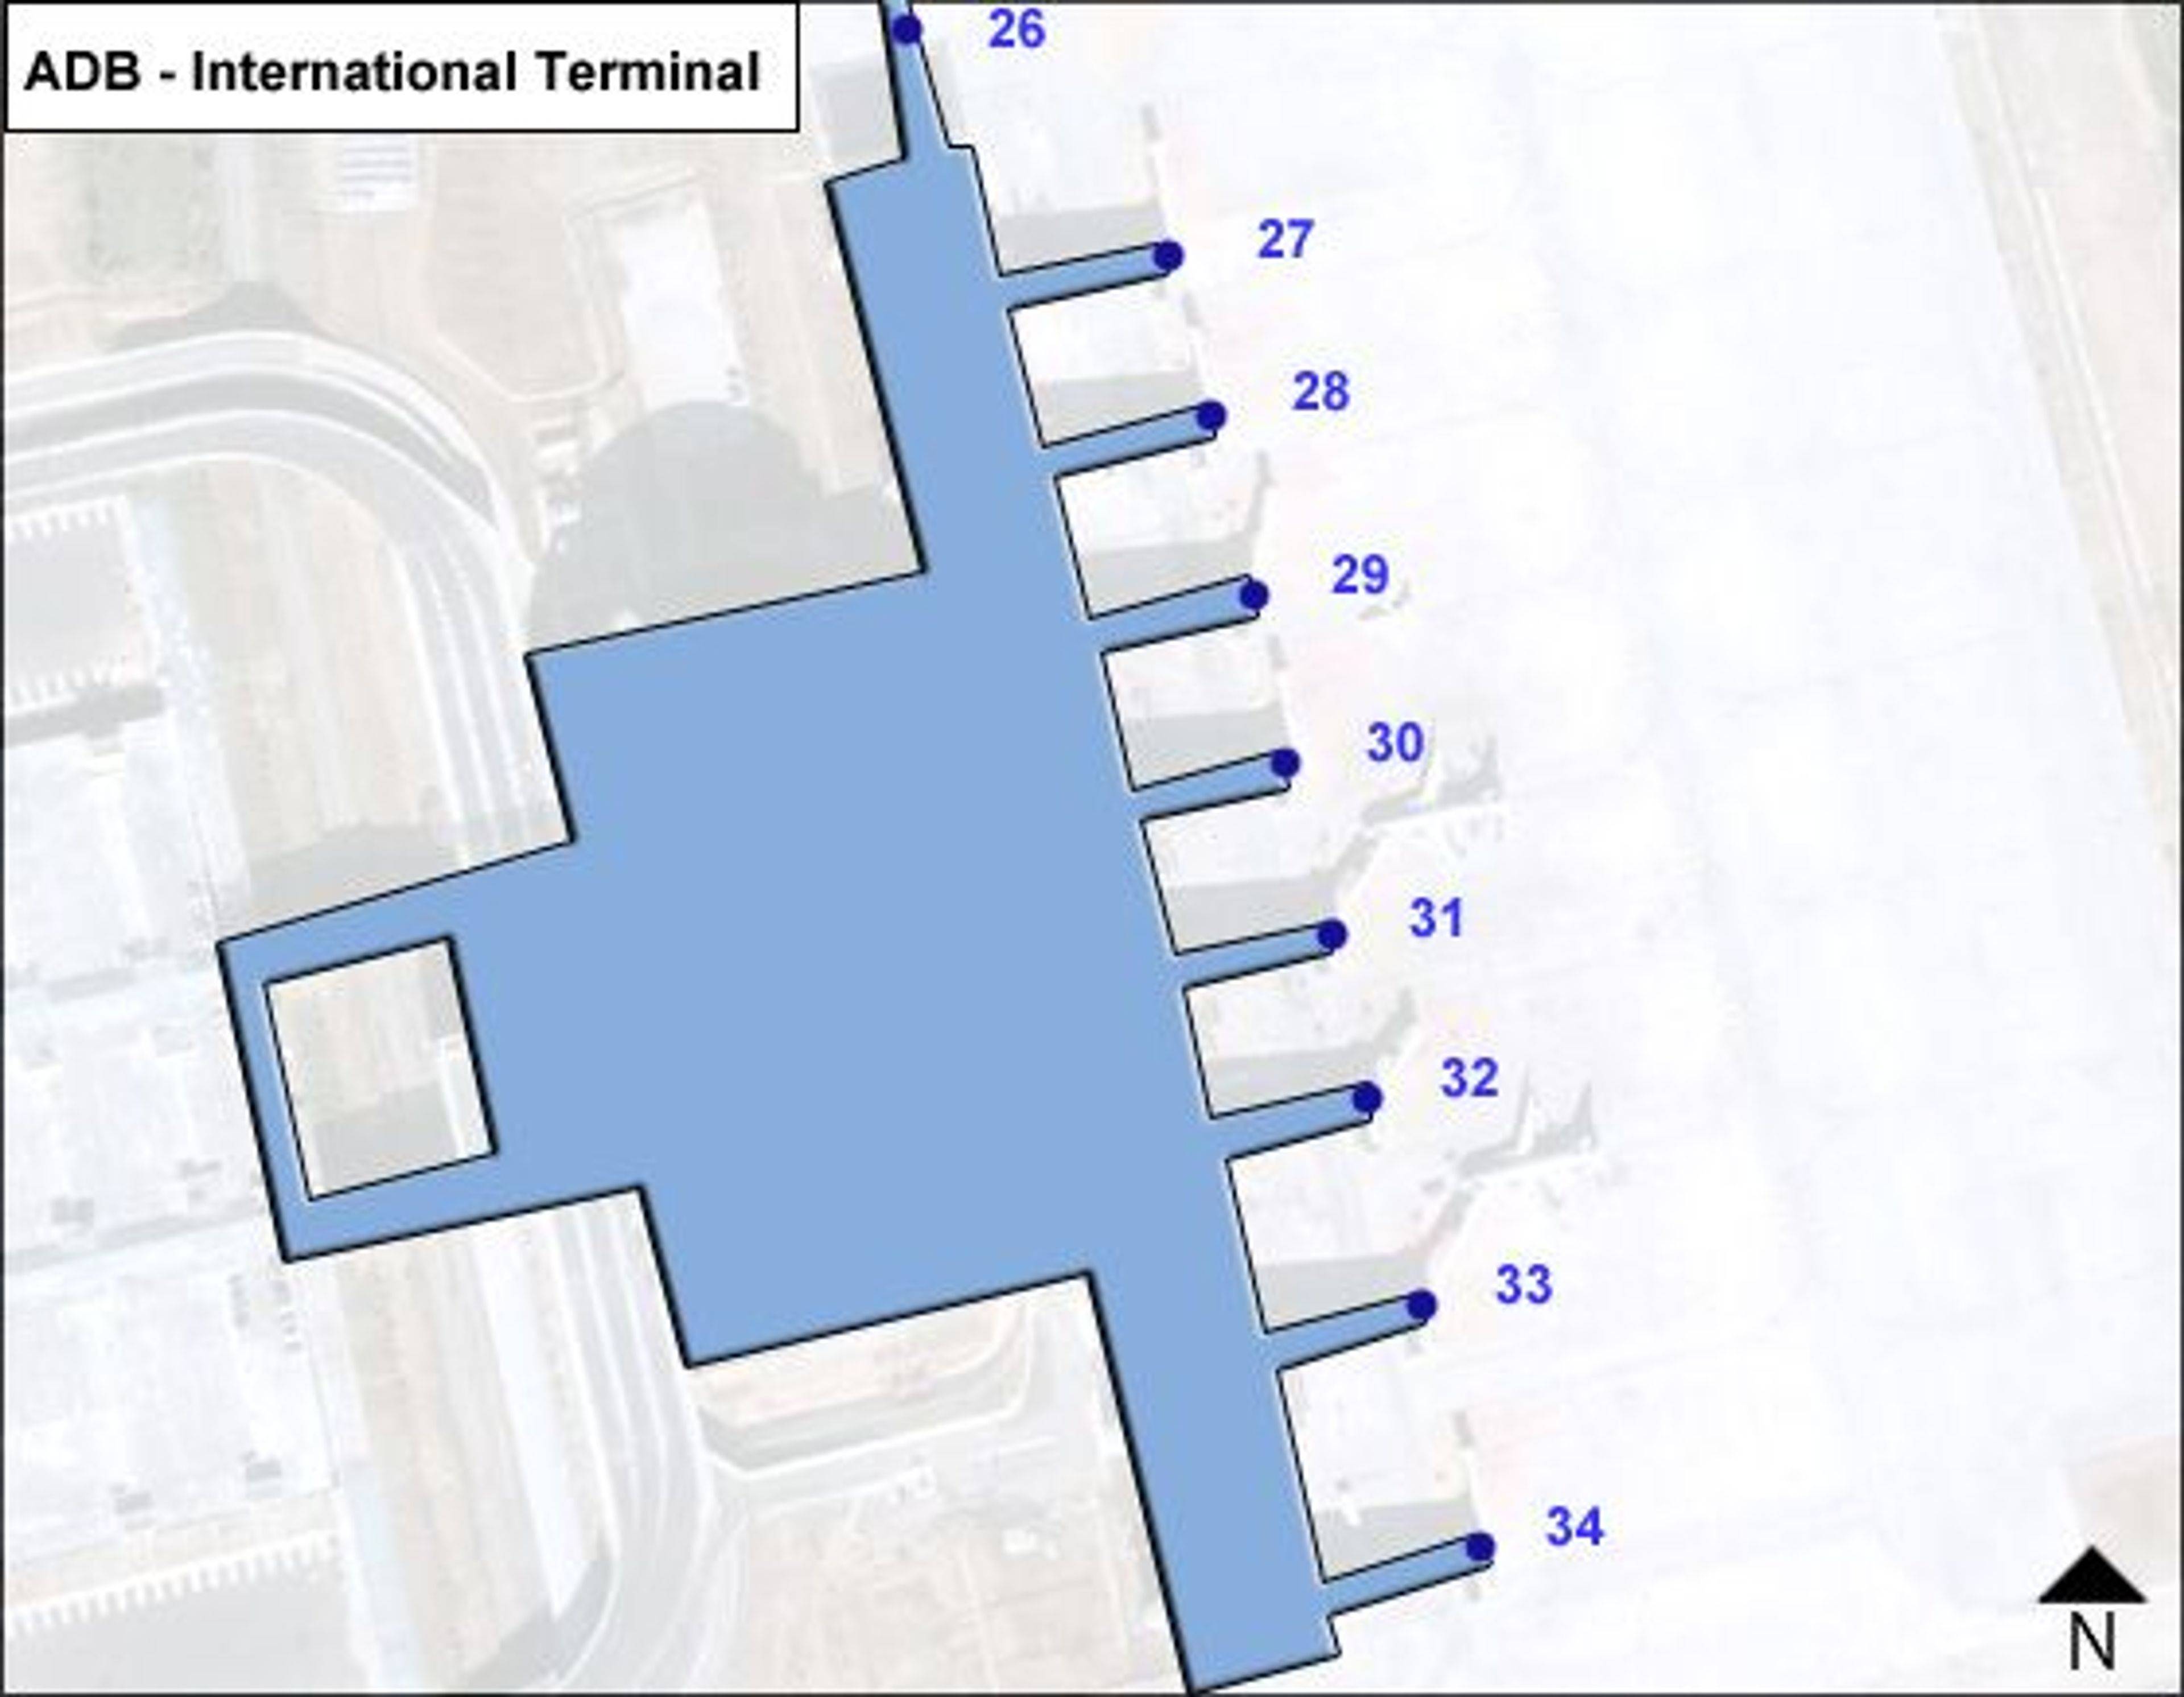 Gaziemir, Izmir Airport Intl Terminal Map